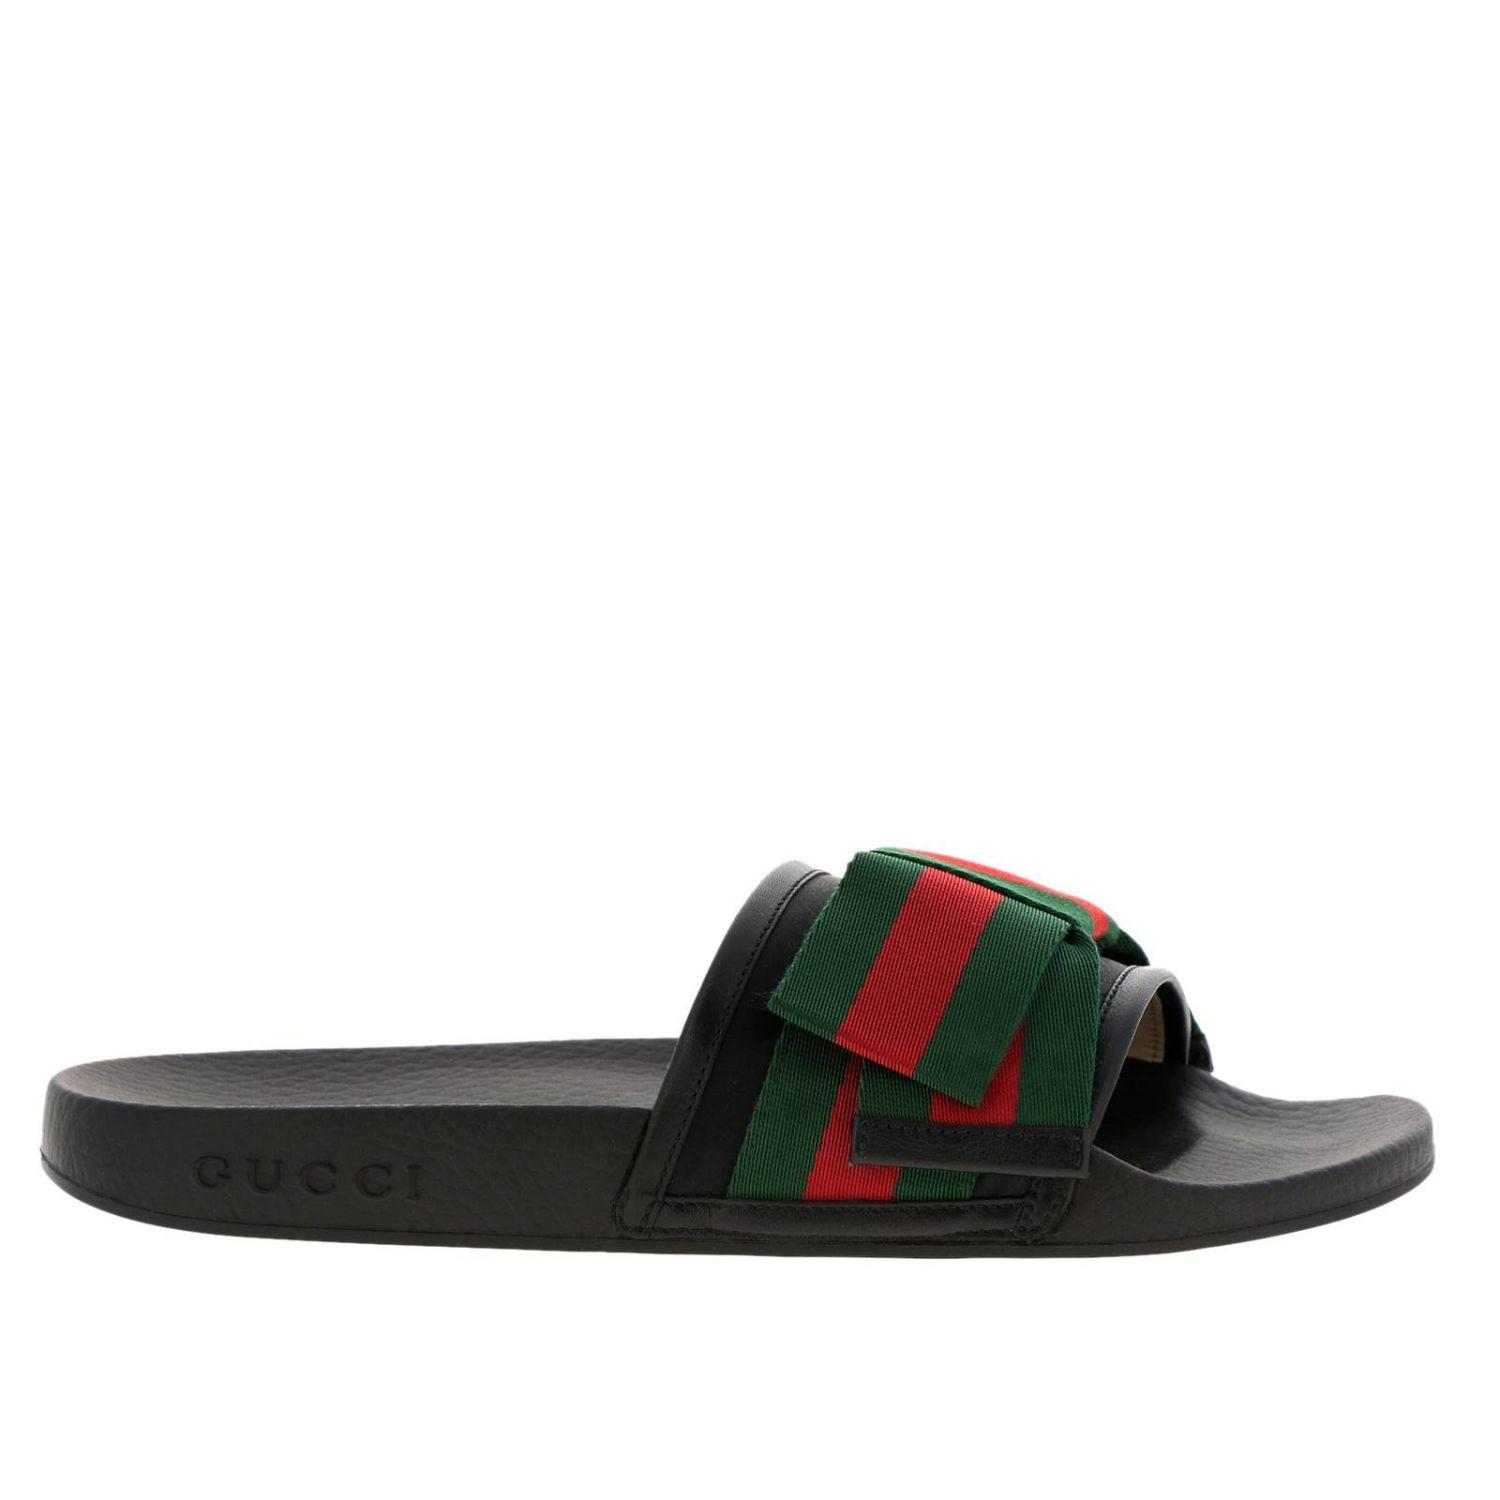 Gucci Beach Sandals Klw10 in Black - Lyst